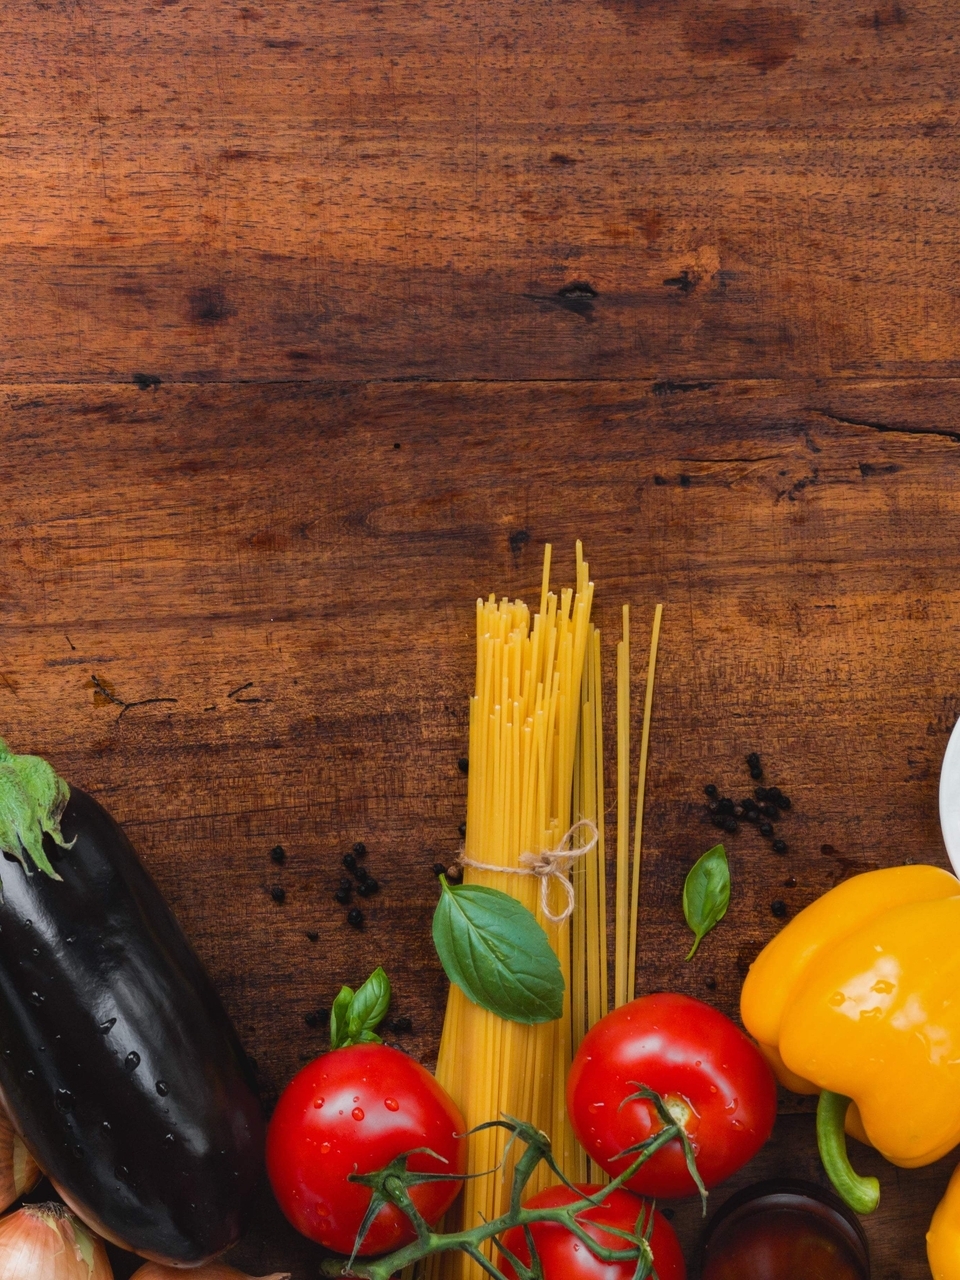 Картинка: Макароны, баклажан, паста, спагетти, помидоры, перец, лук, овощи